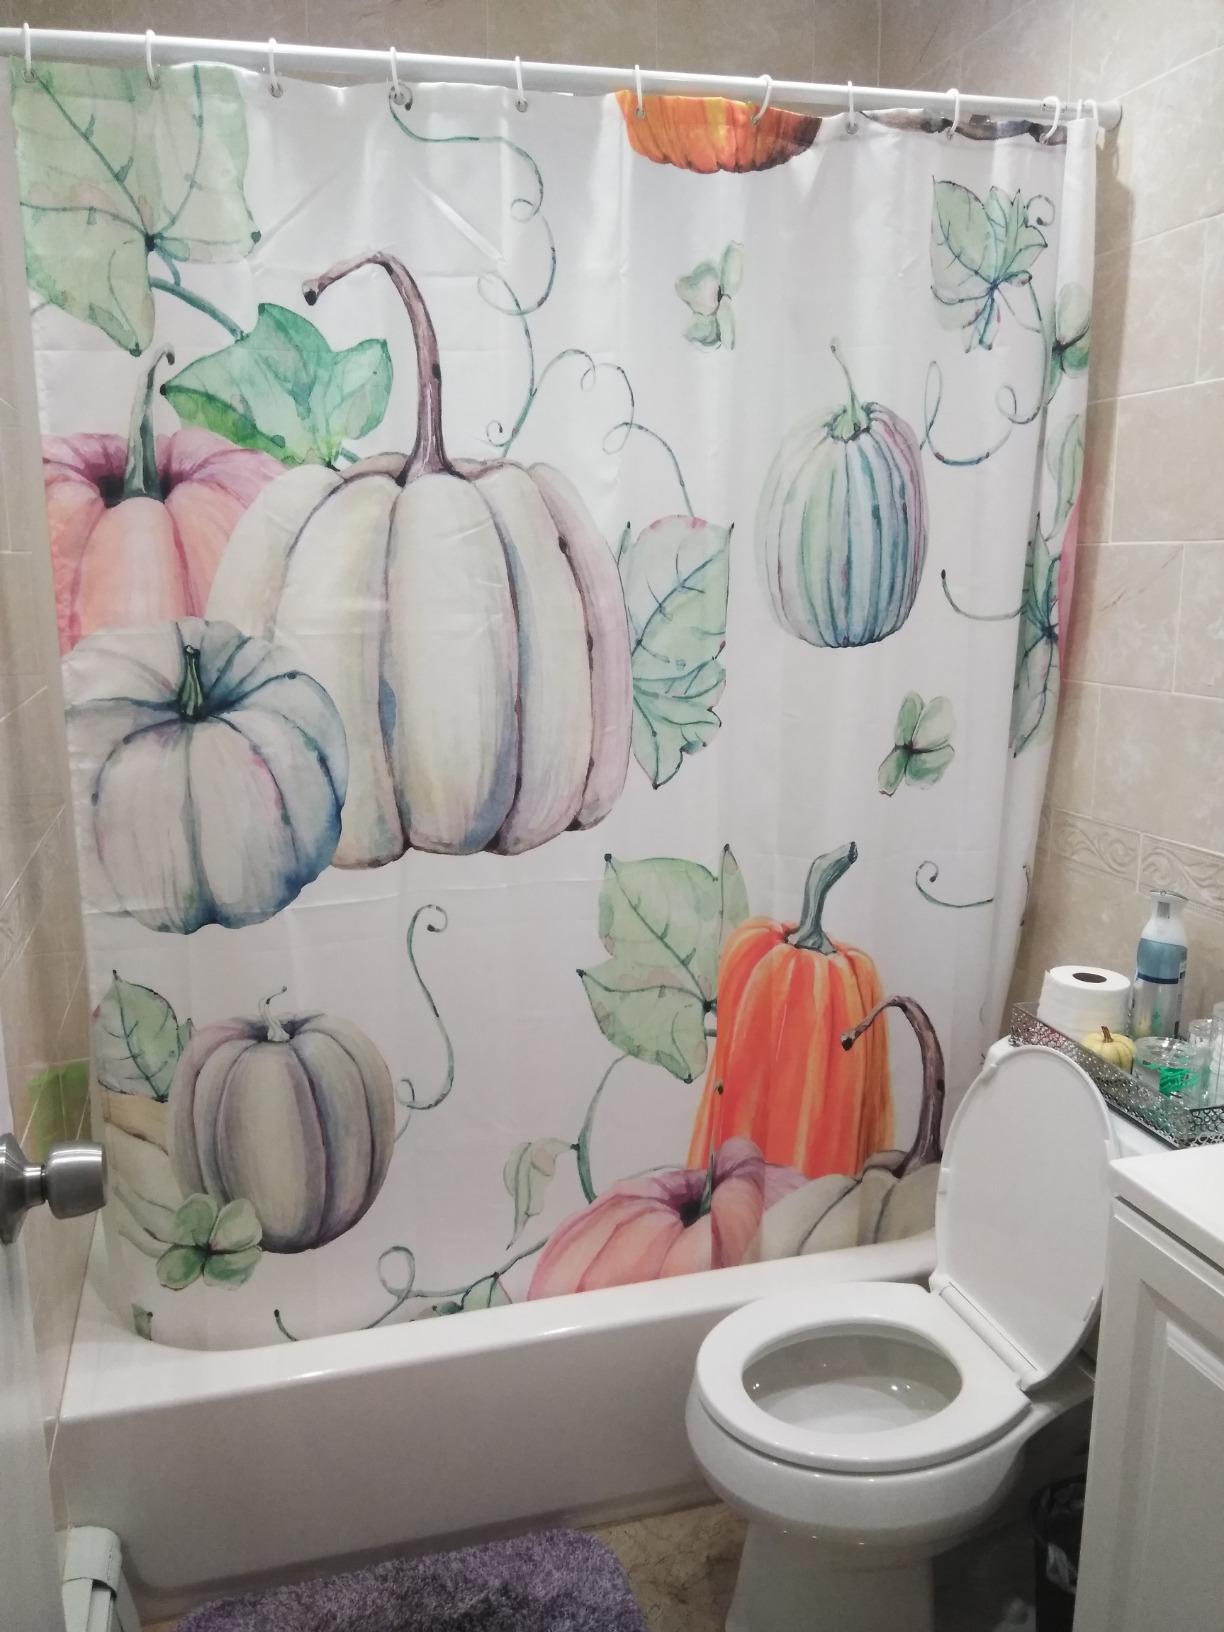 Watercolor Thanksgiving Autumn Harvest Seamless Pumpkin Shower Curtain